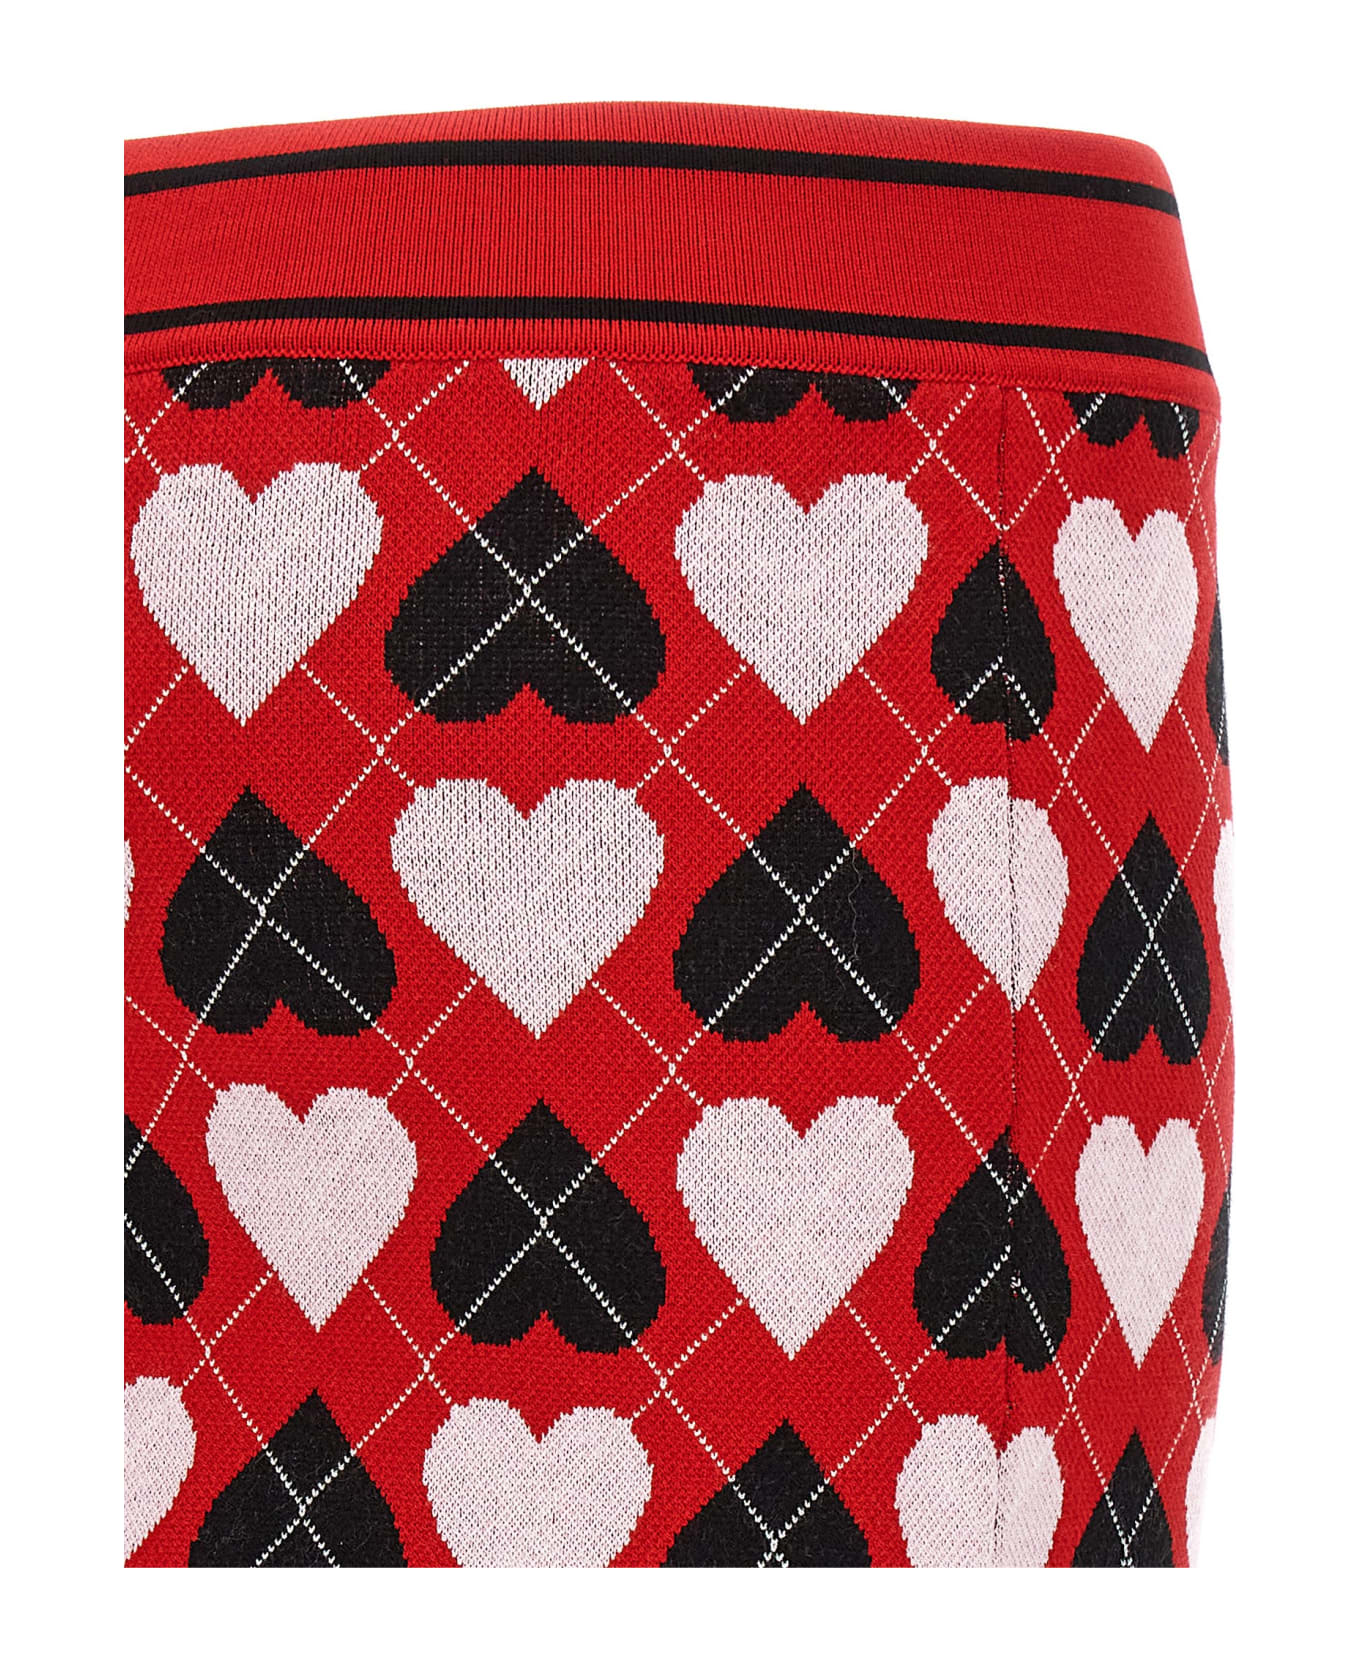 MSGM 'hearts' Skirt - Multicolor